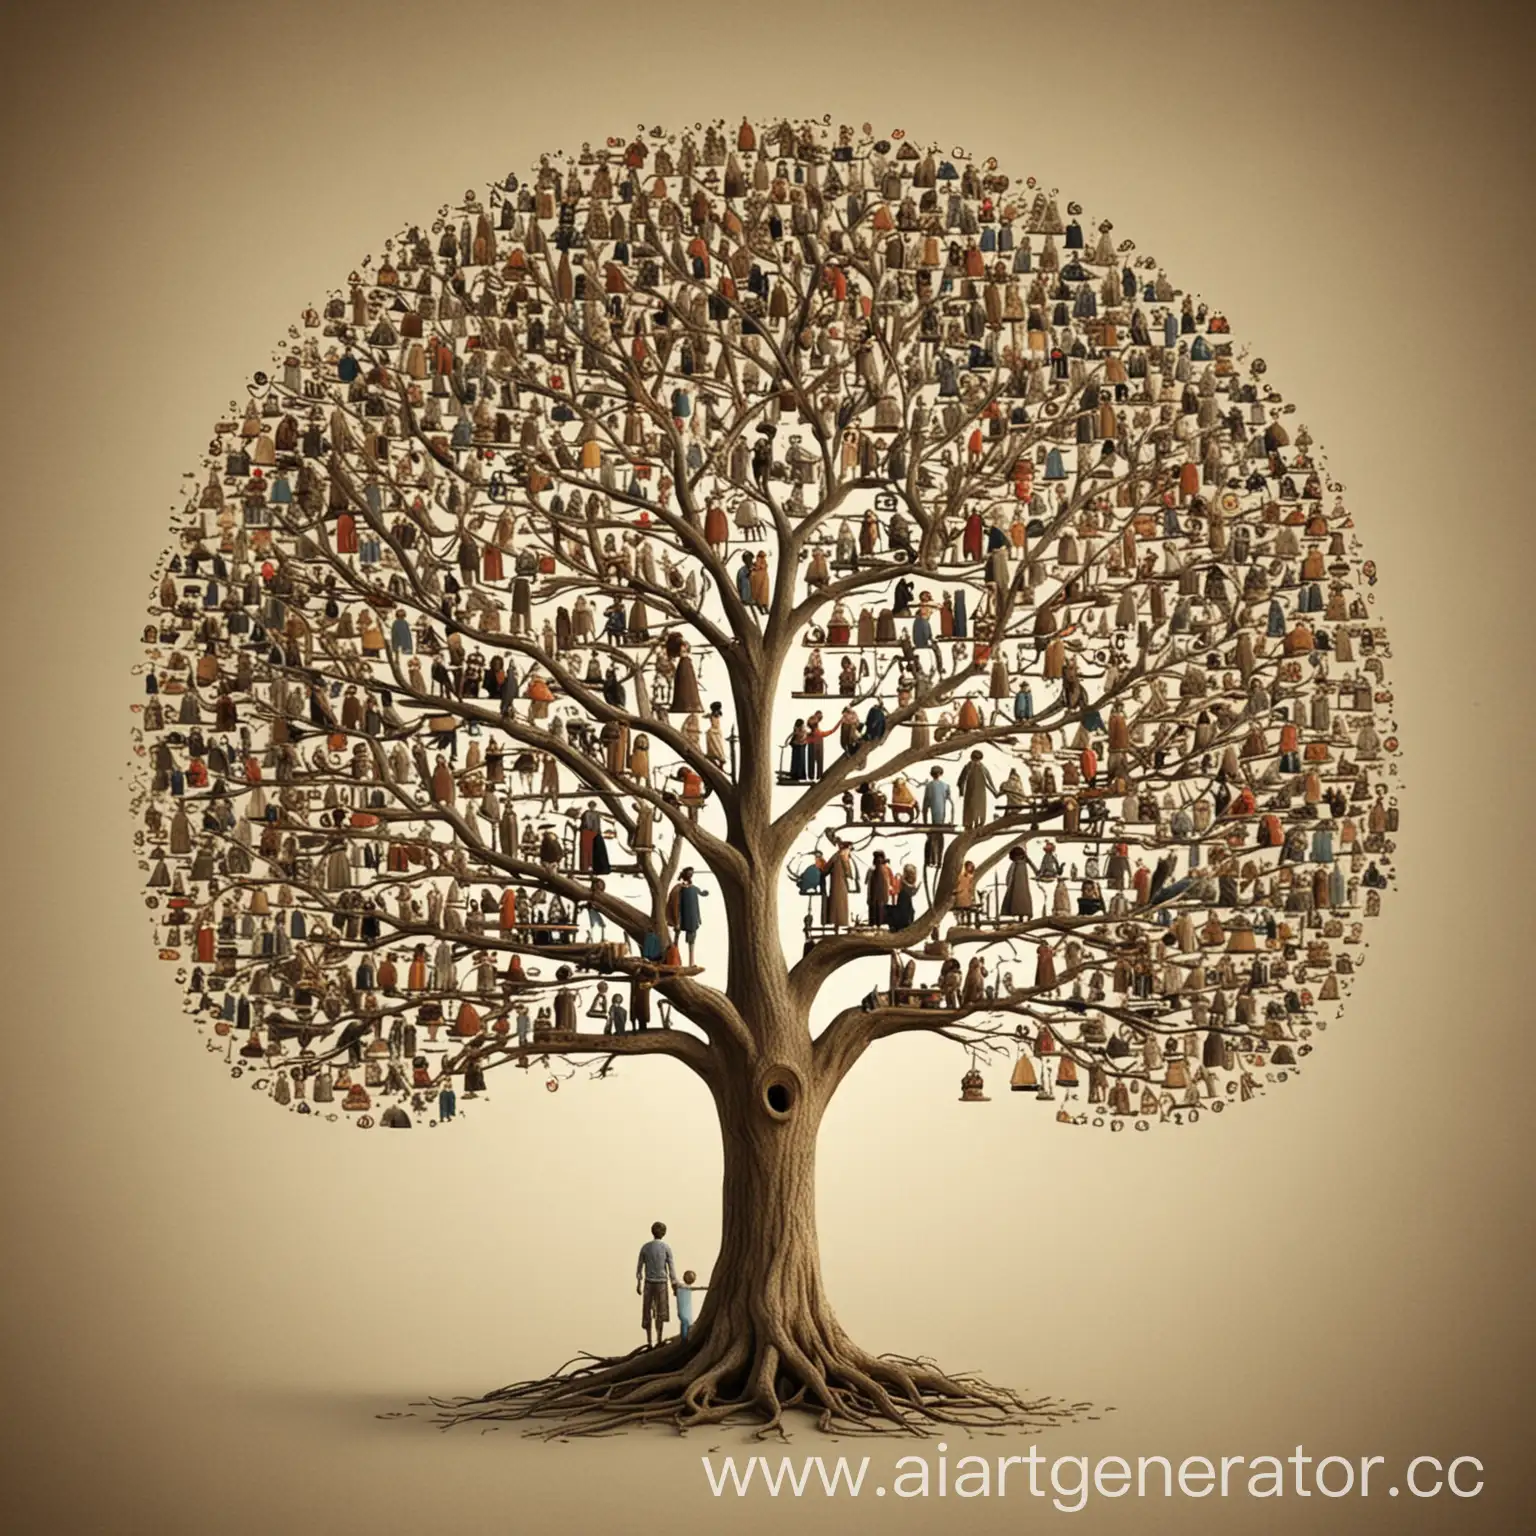 Family-Tree-Story-Generations-Bonding-Through-Time